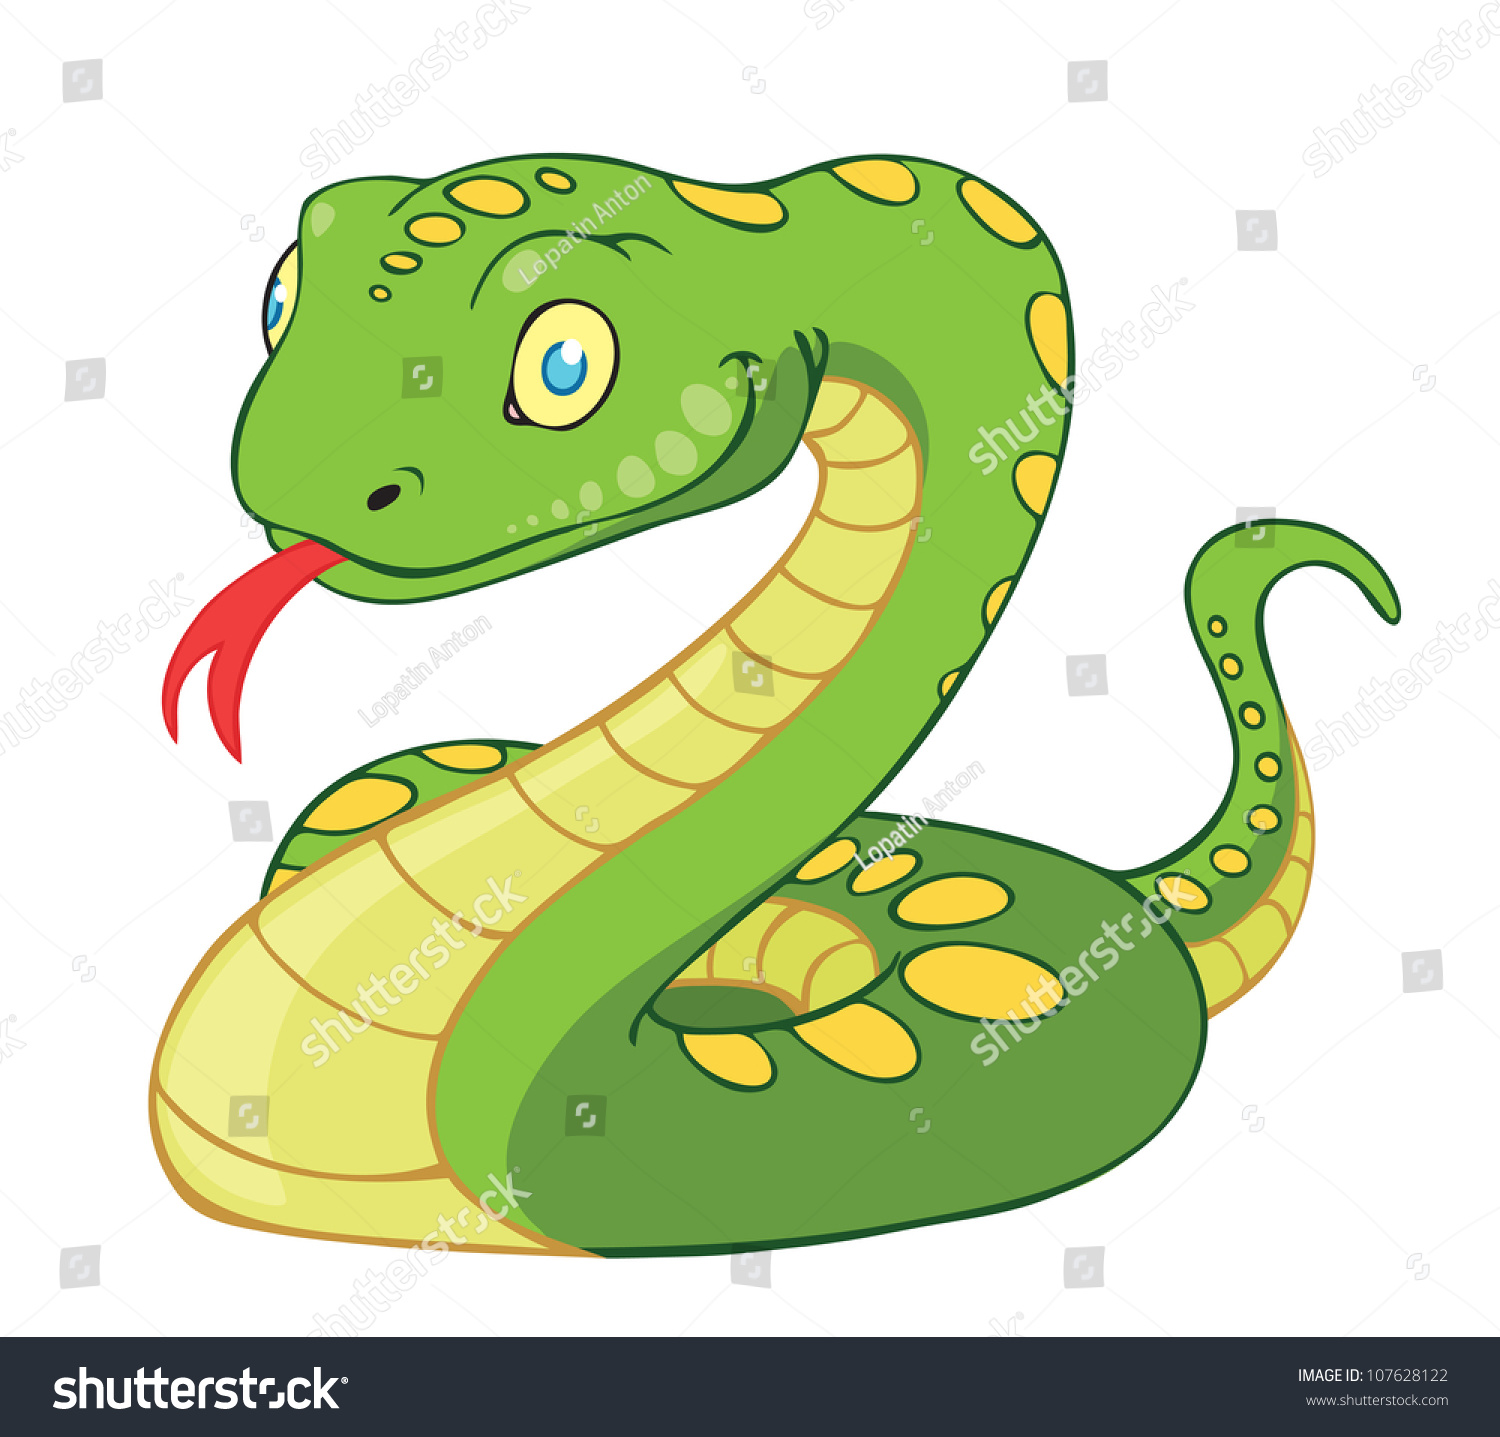 Cartoon Snake Stock Illustration 107628122 - Shutterstock